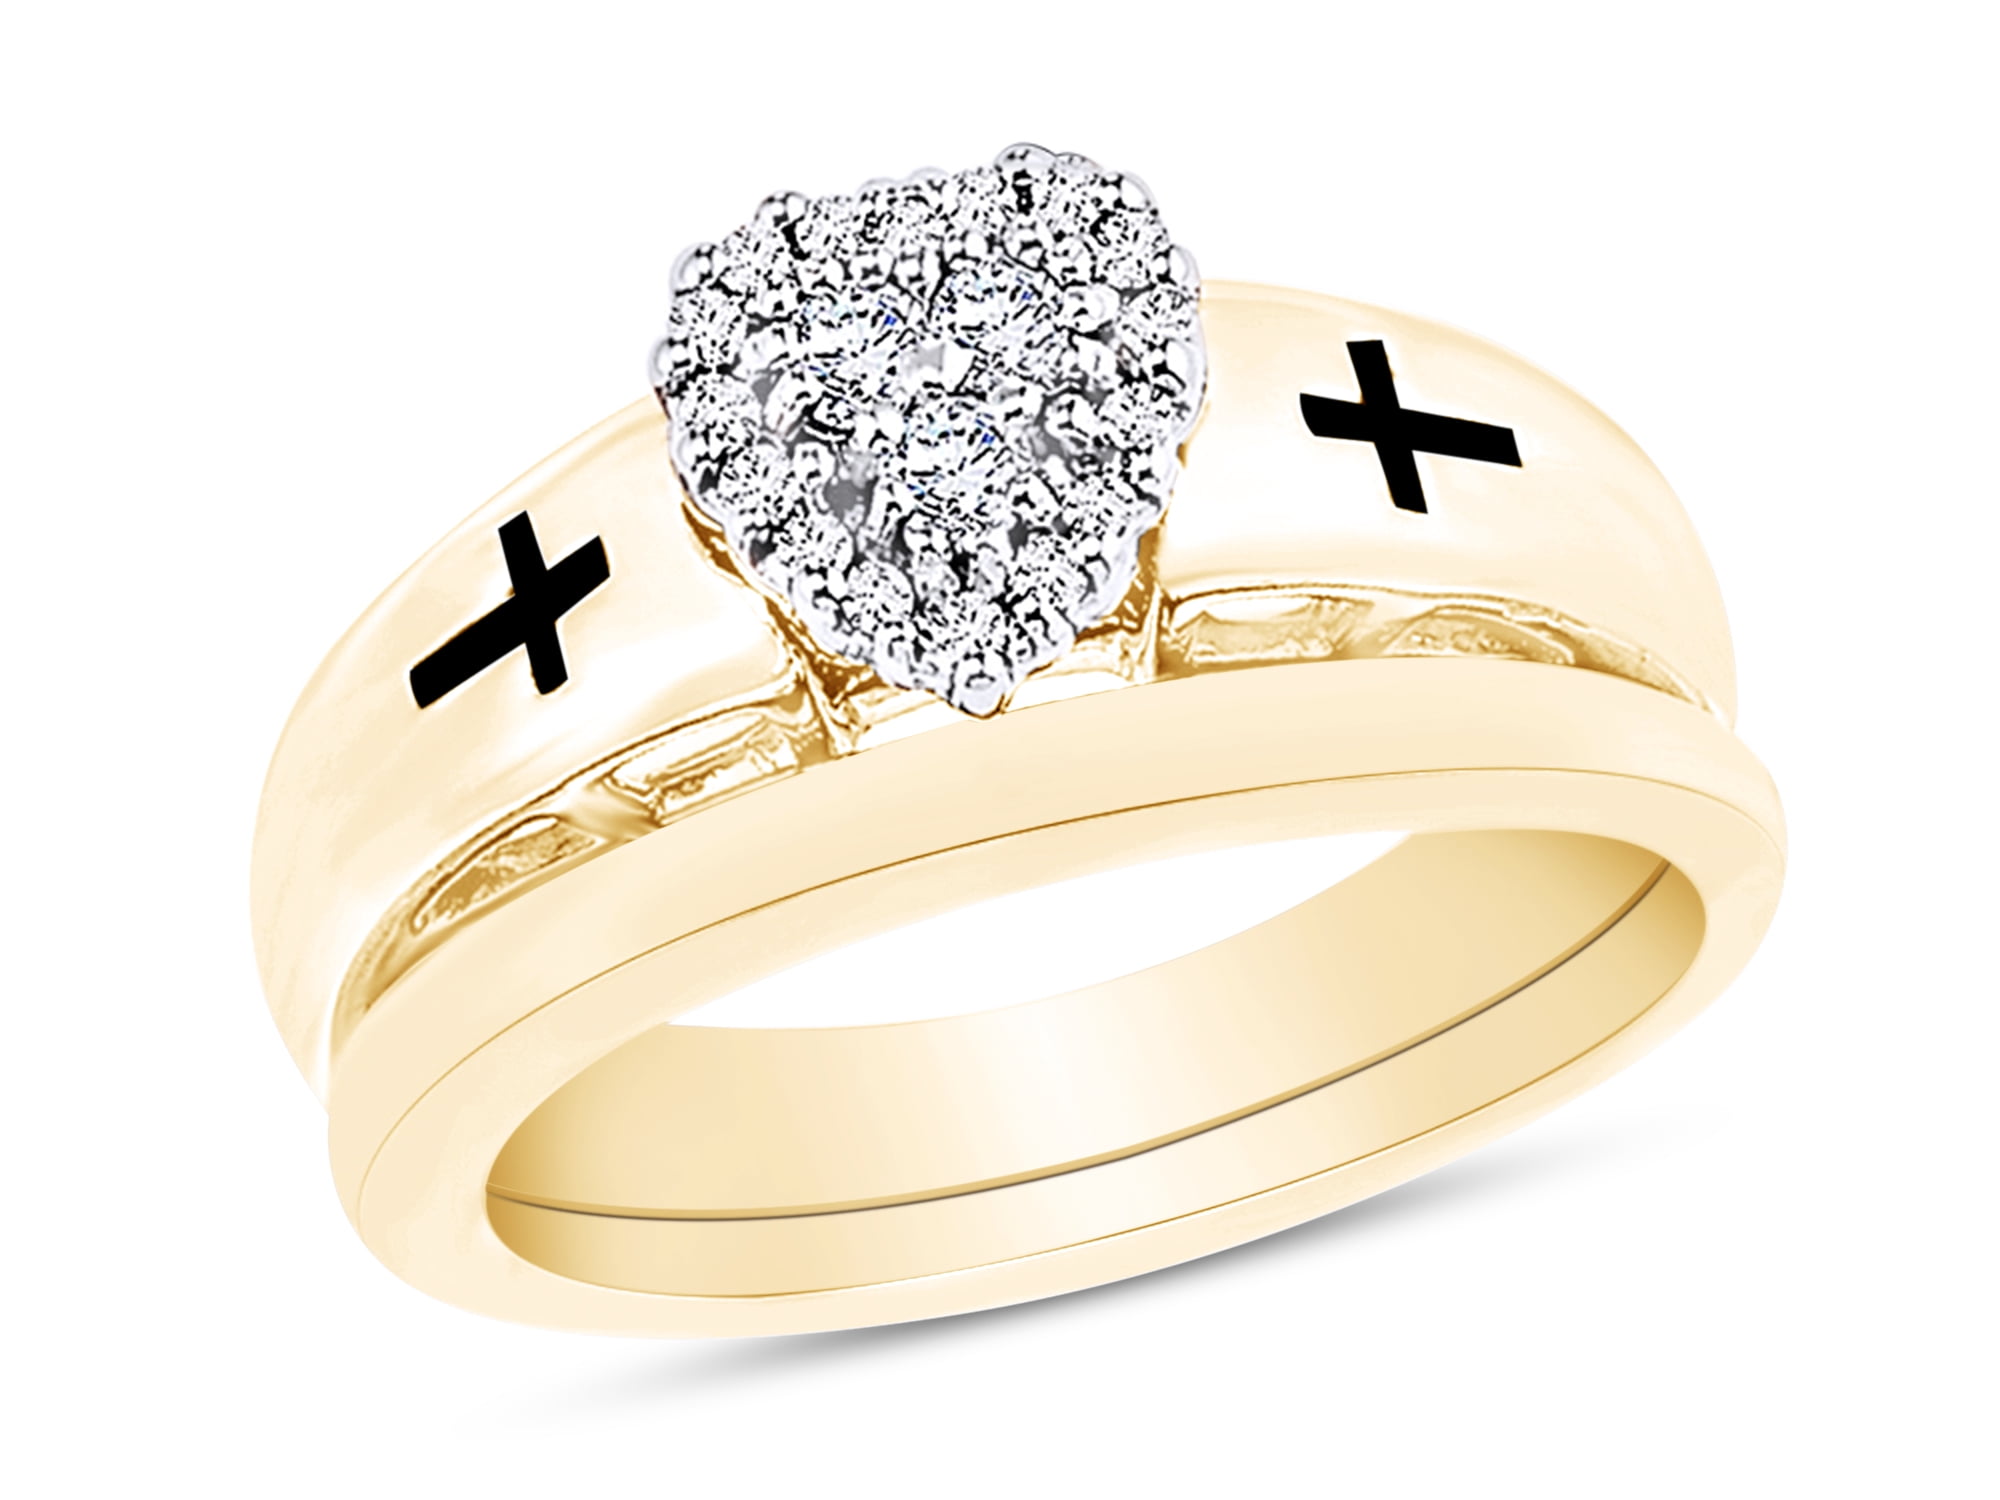 Details about   1.4ct Round Cut Diamond Engagement Ring 14k Rose Gold Finish Bridal Wedding Band 